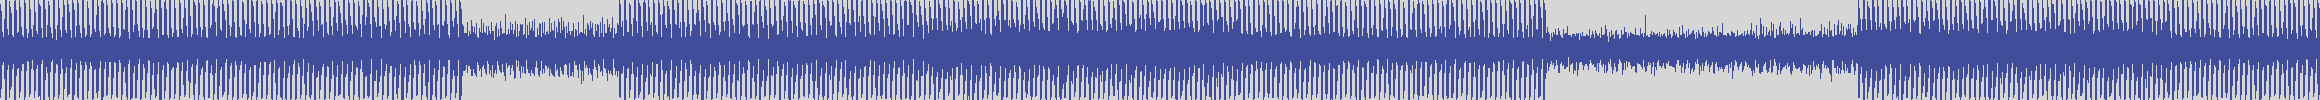 nf_boyz_records [NFY020] Kay Ef Ci - Gas Lightnin' [Autumn Mix] audio wave form